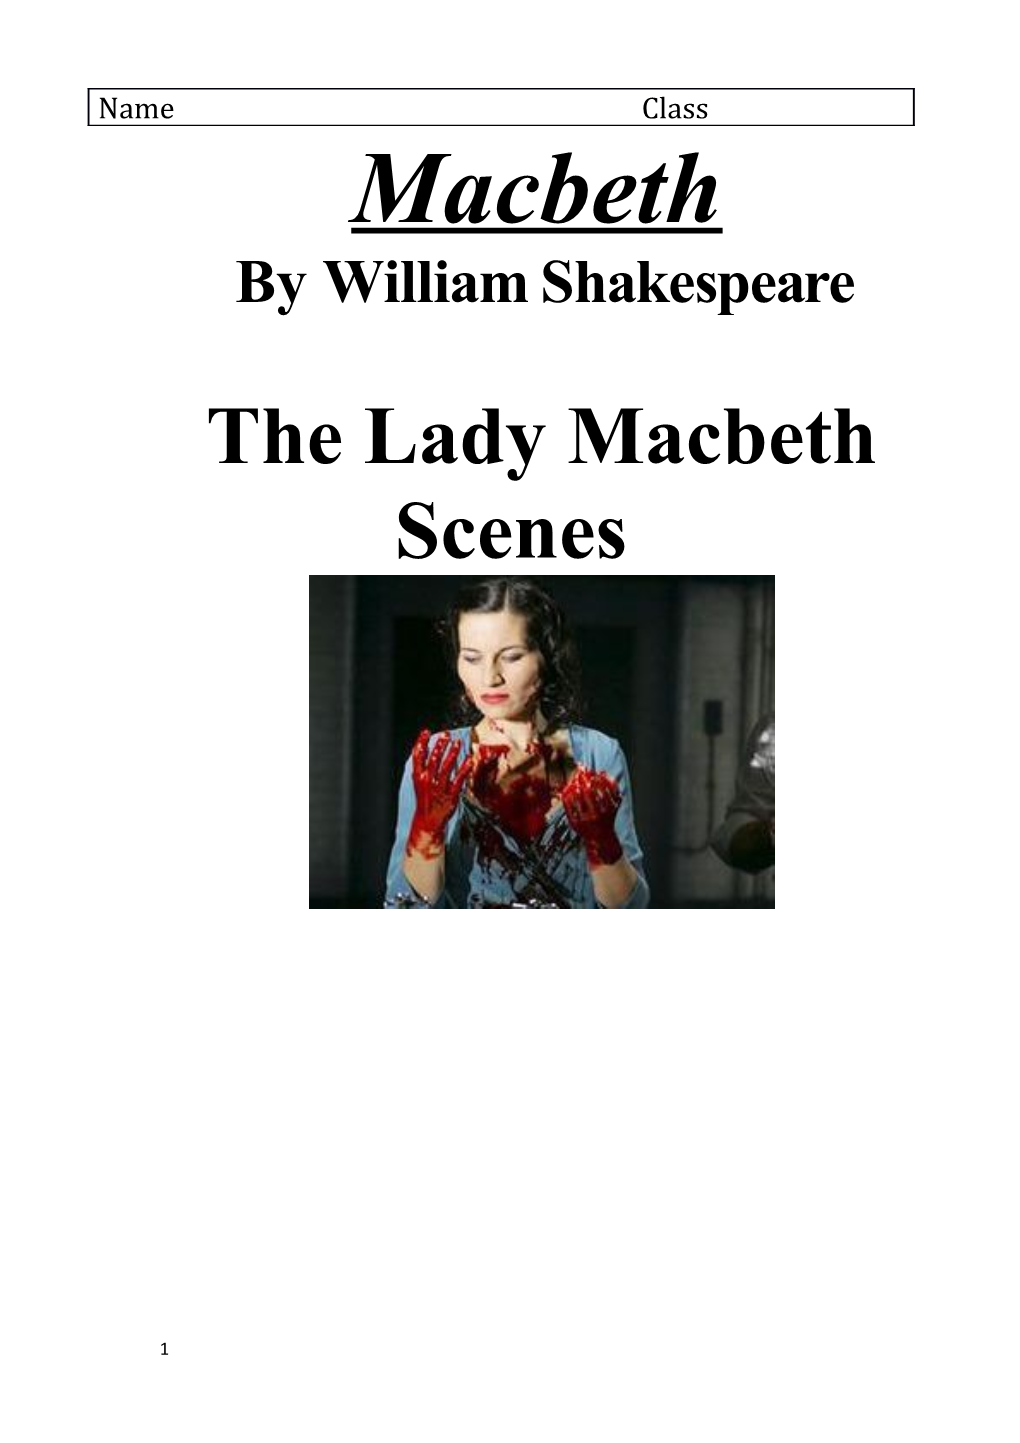 The Lady Macbeth Scenes